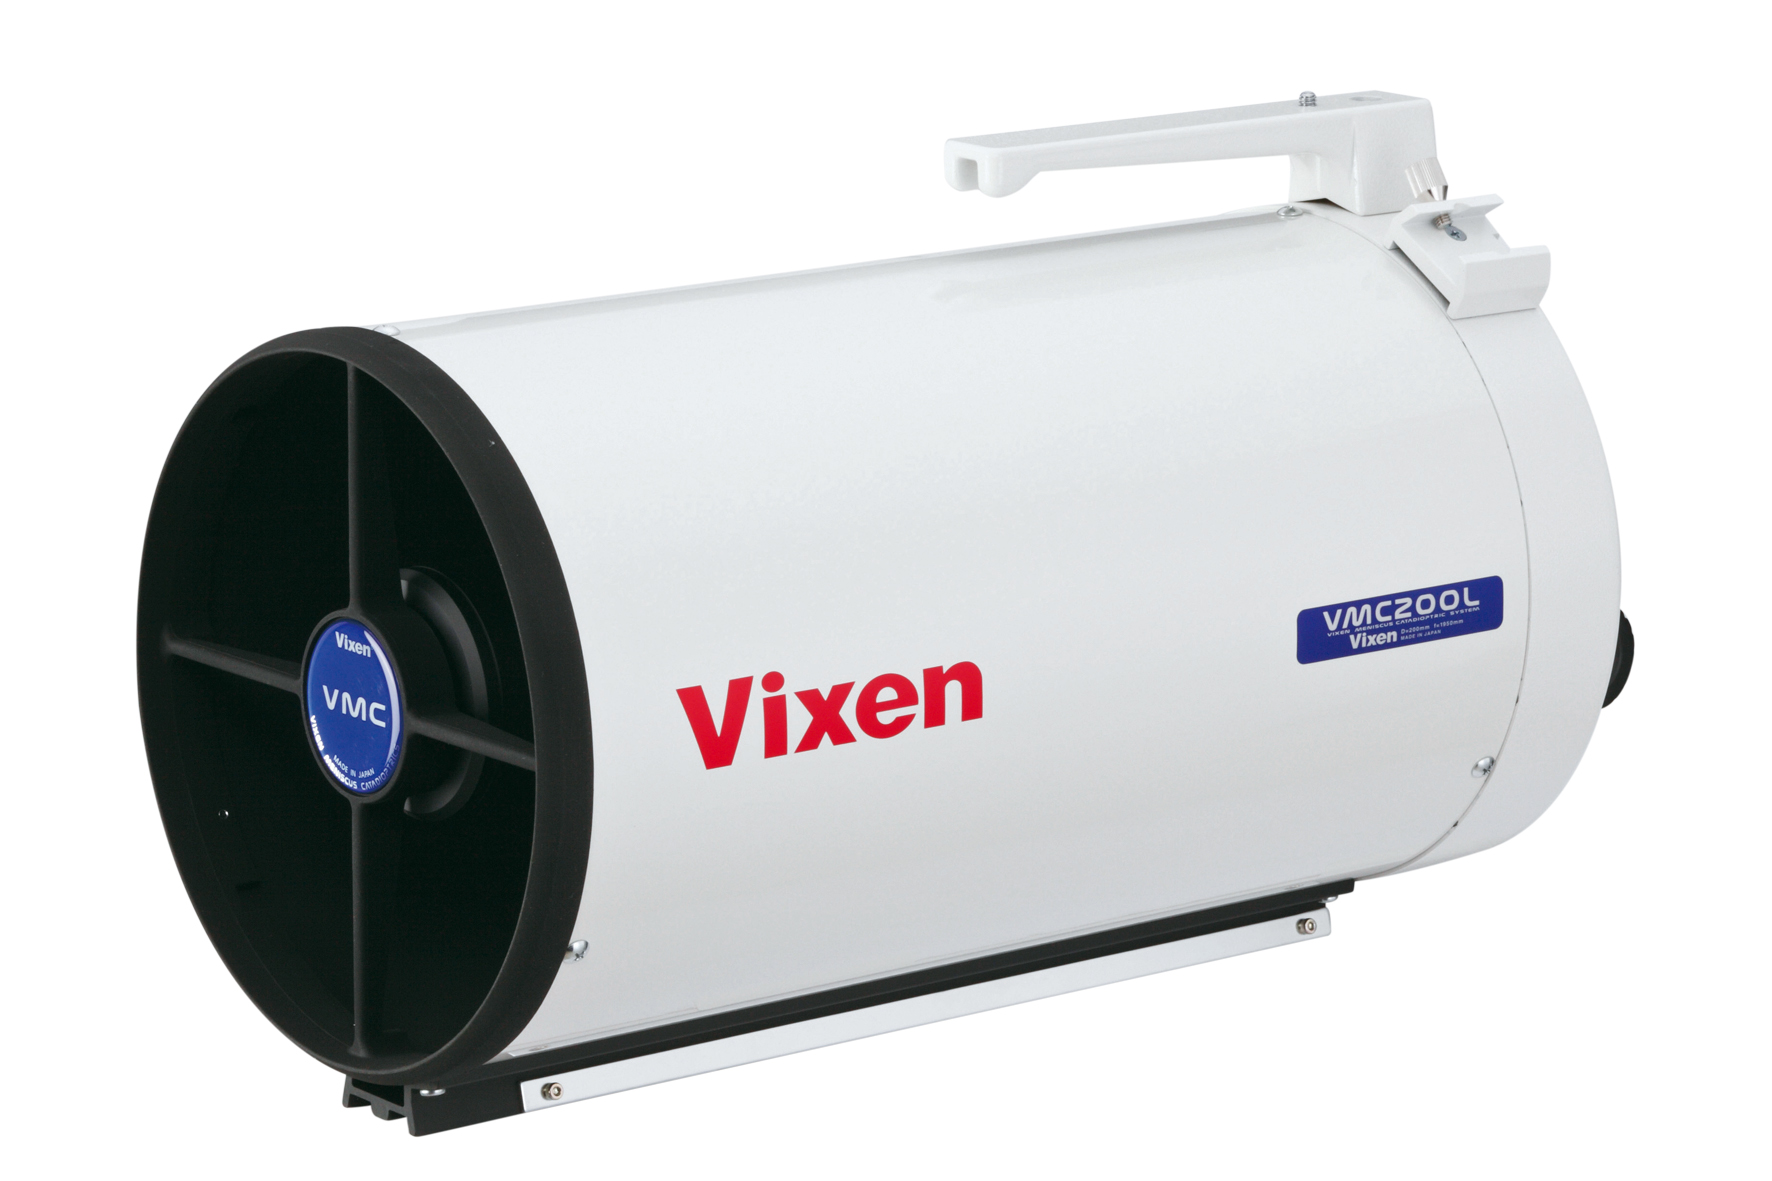 Vixen VMC200L Maksutov-Cassegrain mirror telescope - optical tube